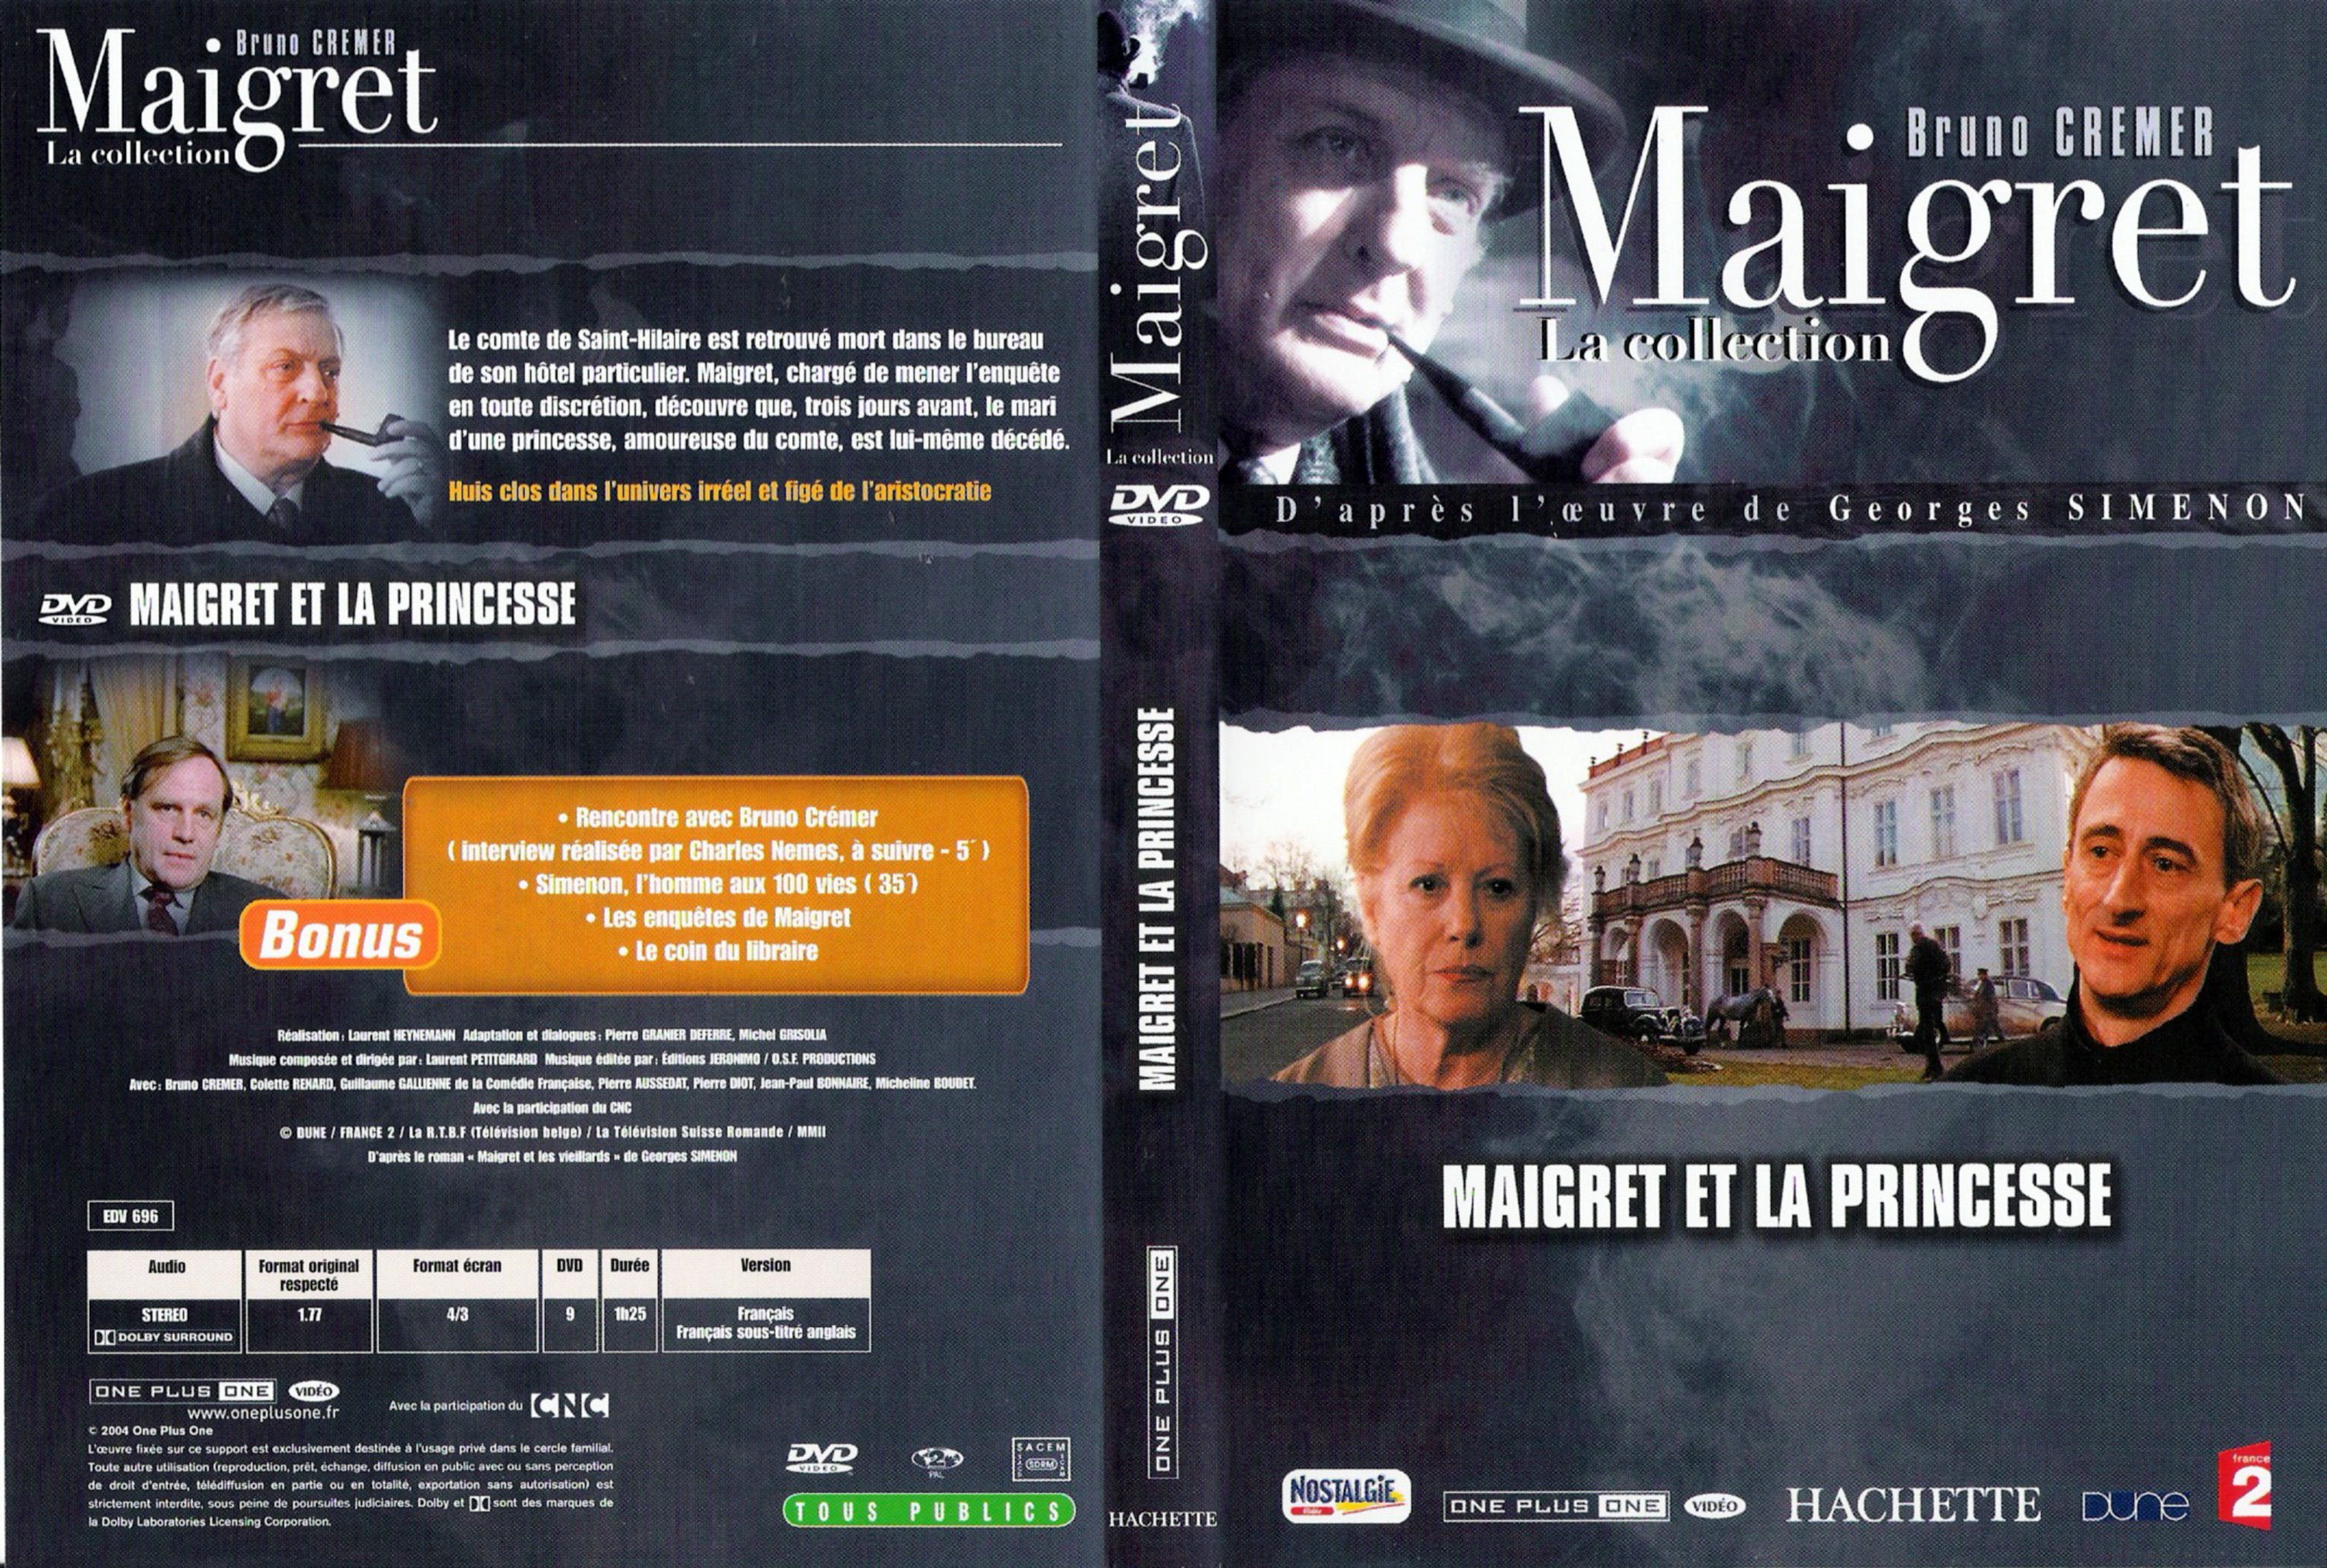 Jaquette DVD Maigret et la princesse (Bruno Cremer)